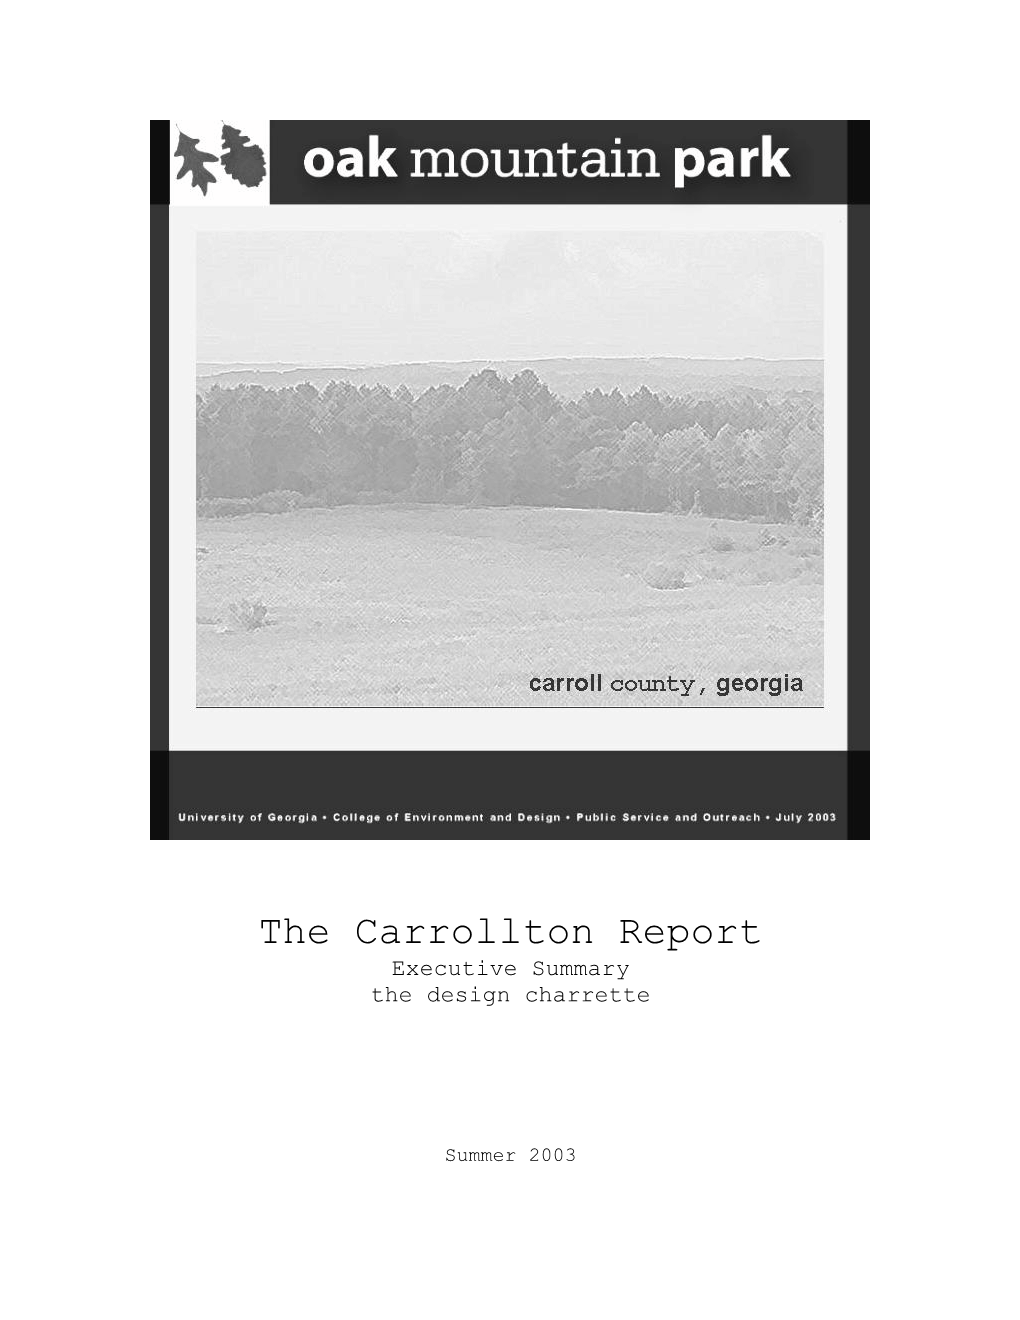 The Carrollton Report Executive Summary the Design Charrette